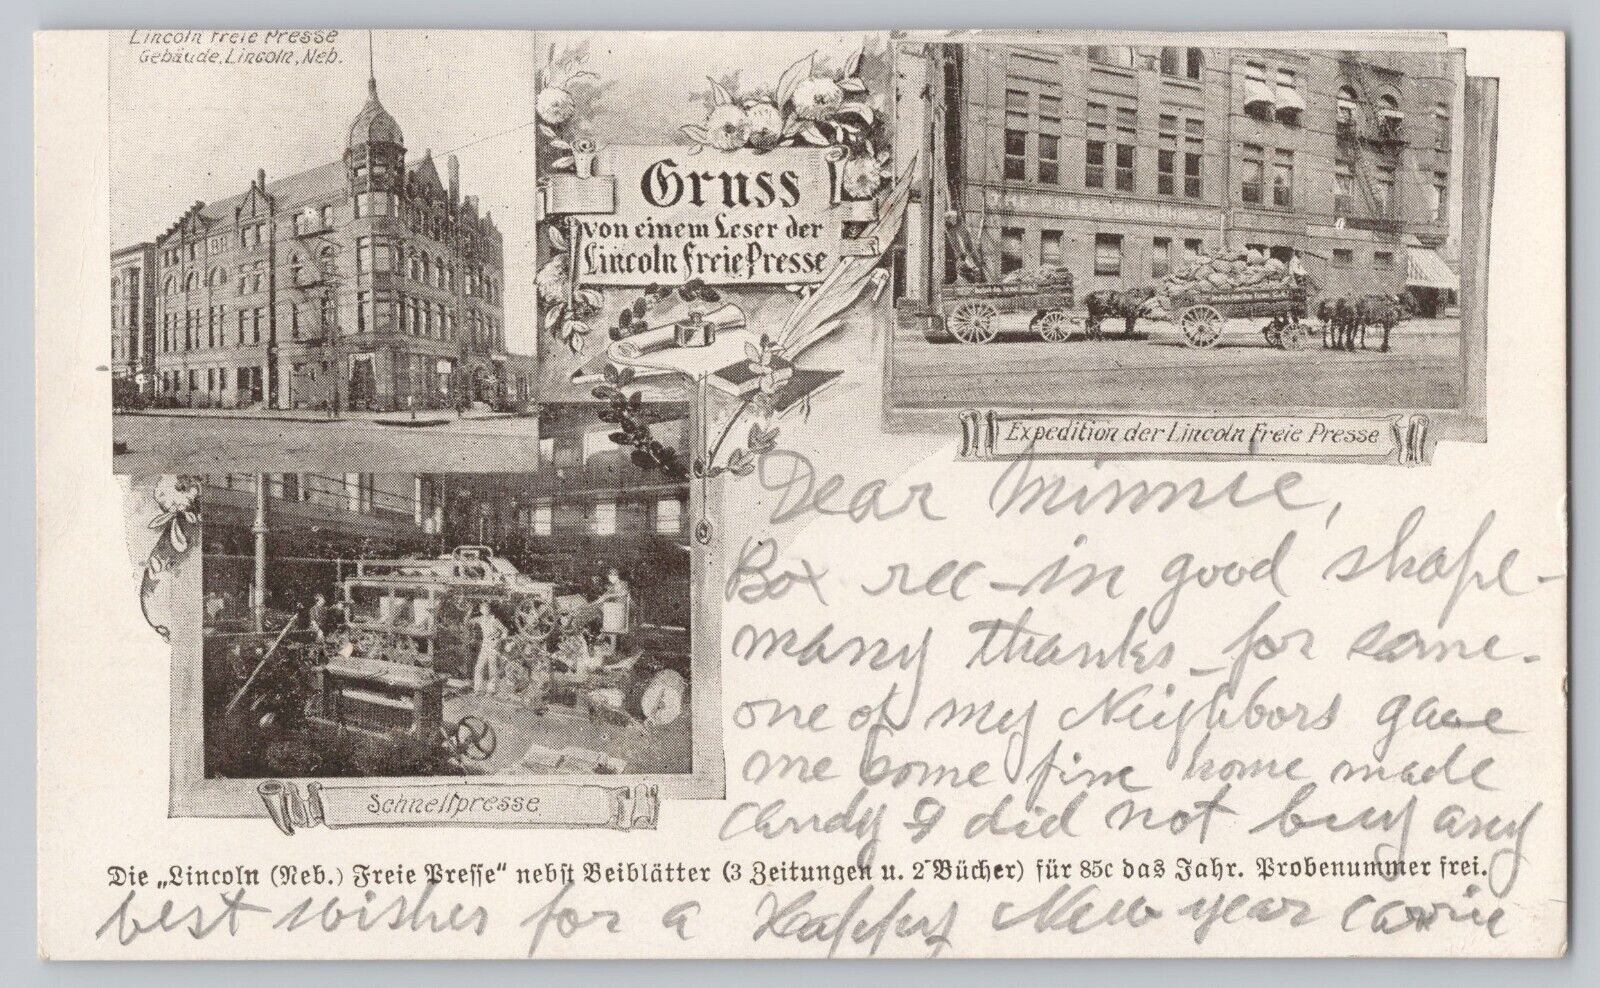 Lincoln NE Postcard Greeting From a Reader of Lincoln Freie Presse Gruss von